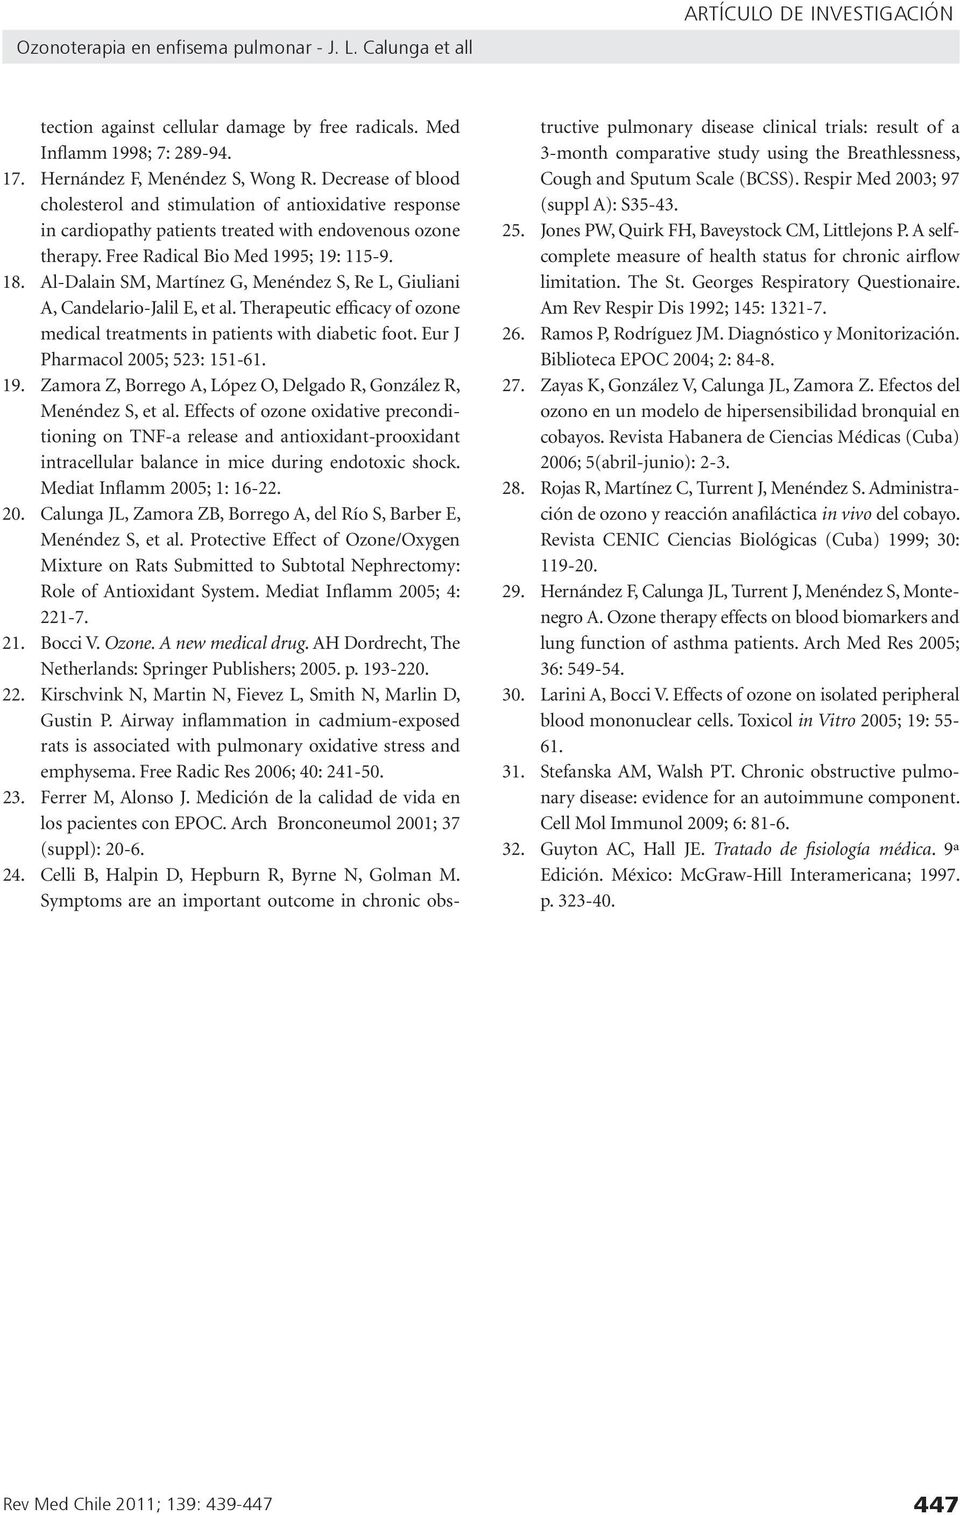 Al-Dalain SM, Martínez G, Menéndez S, Re L, Giuliani A, Candelario-Jalil E, et al. Therapeutic efficacy of ozone medical treatments in patients with diabetic foot. Eur J Pharmacol 2005; 523: 151-61.